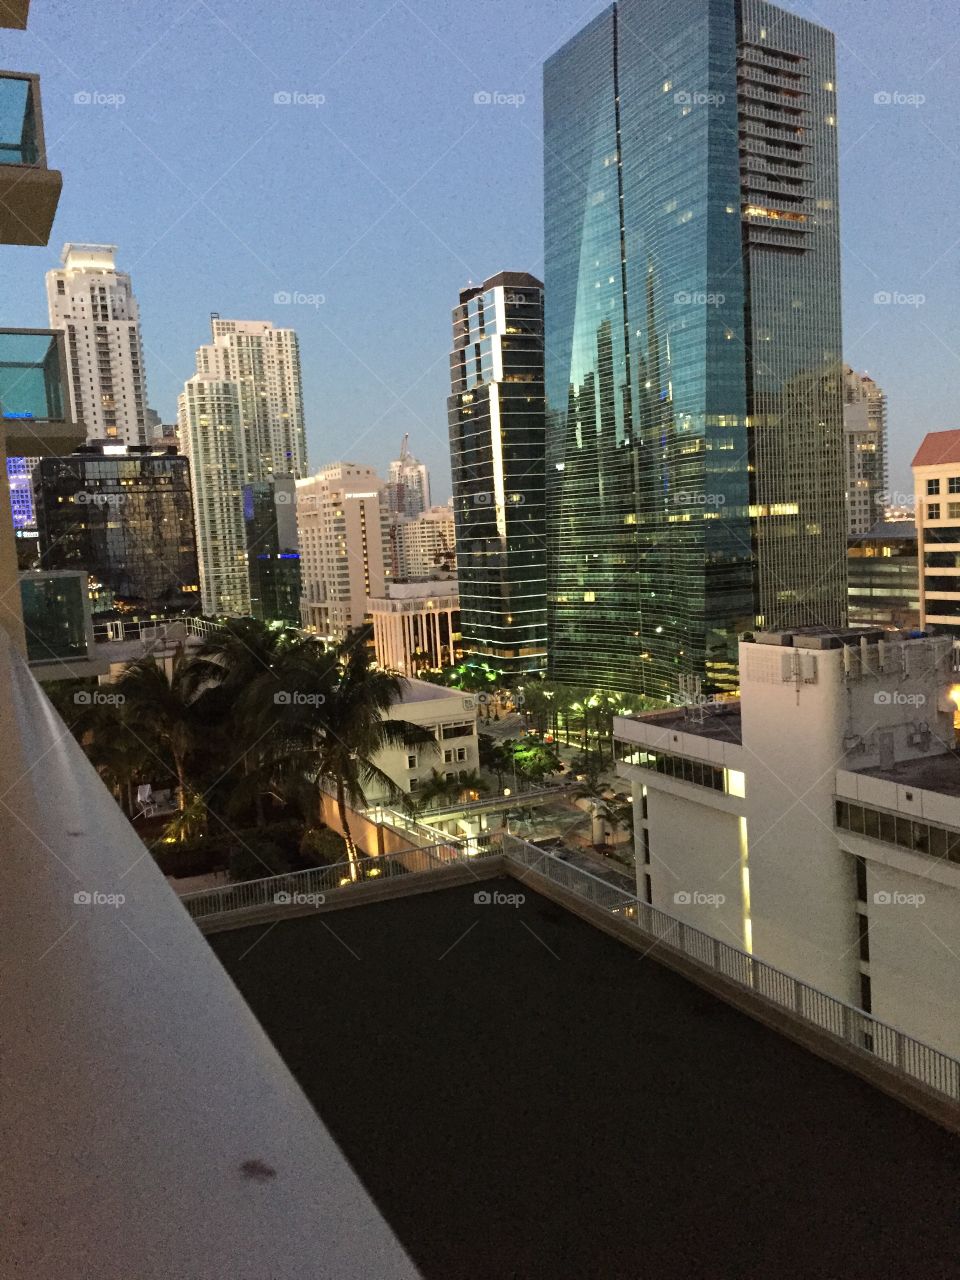 Miami views